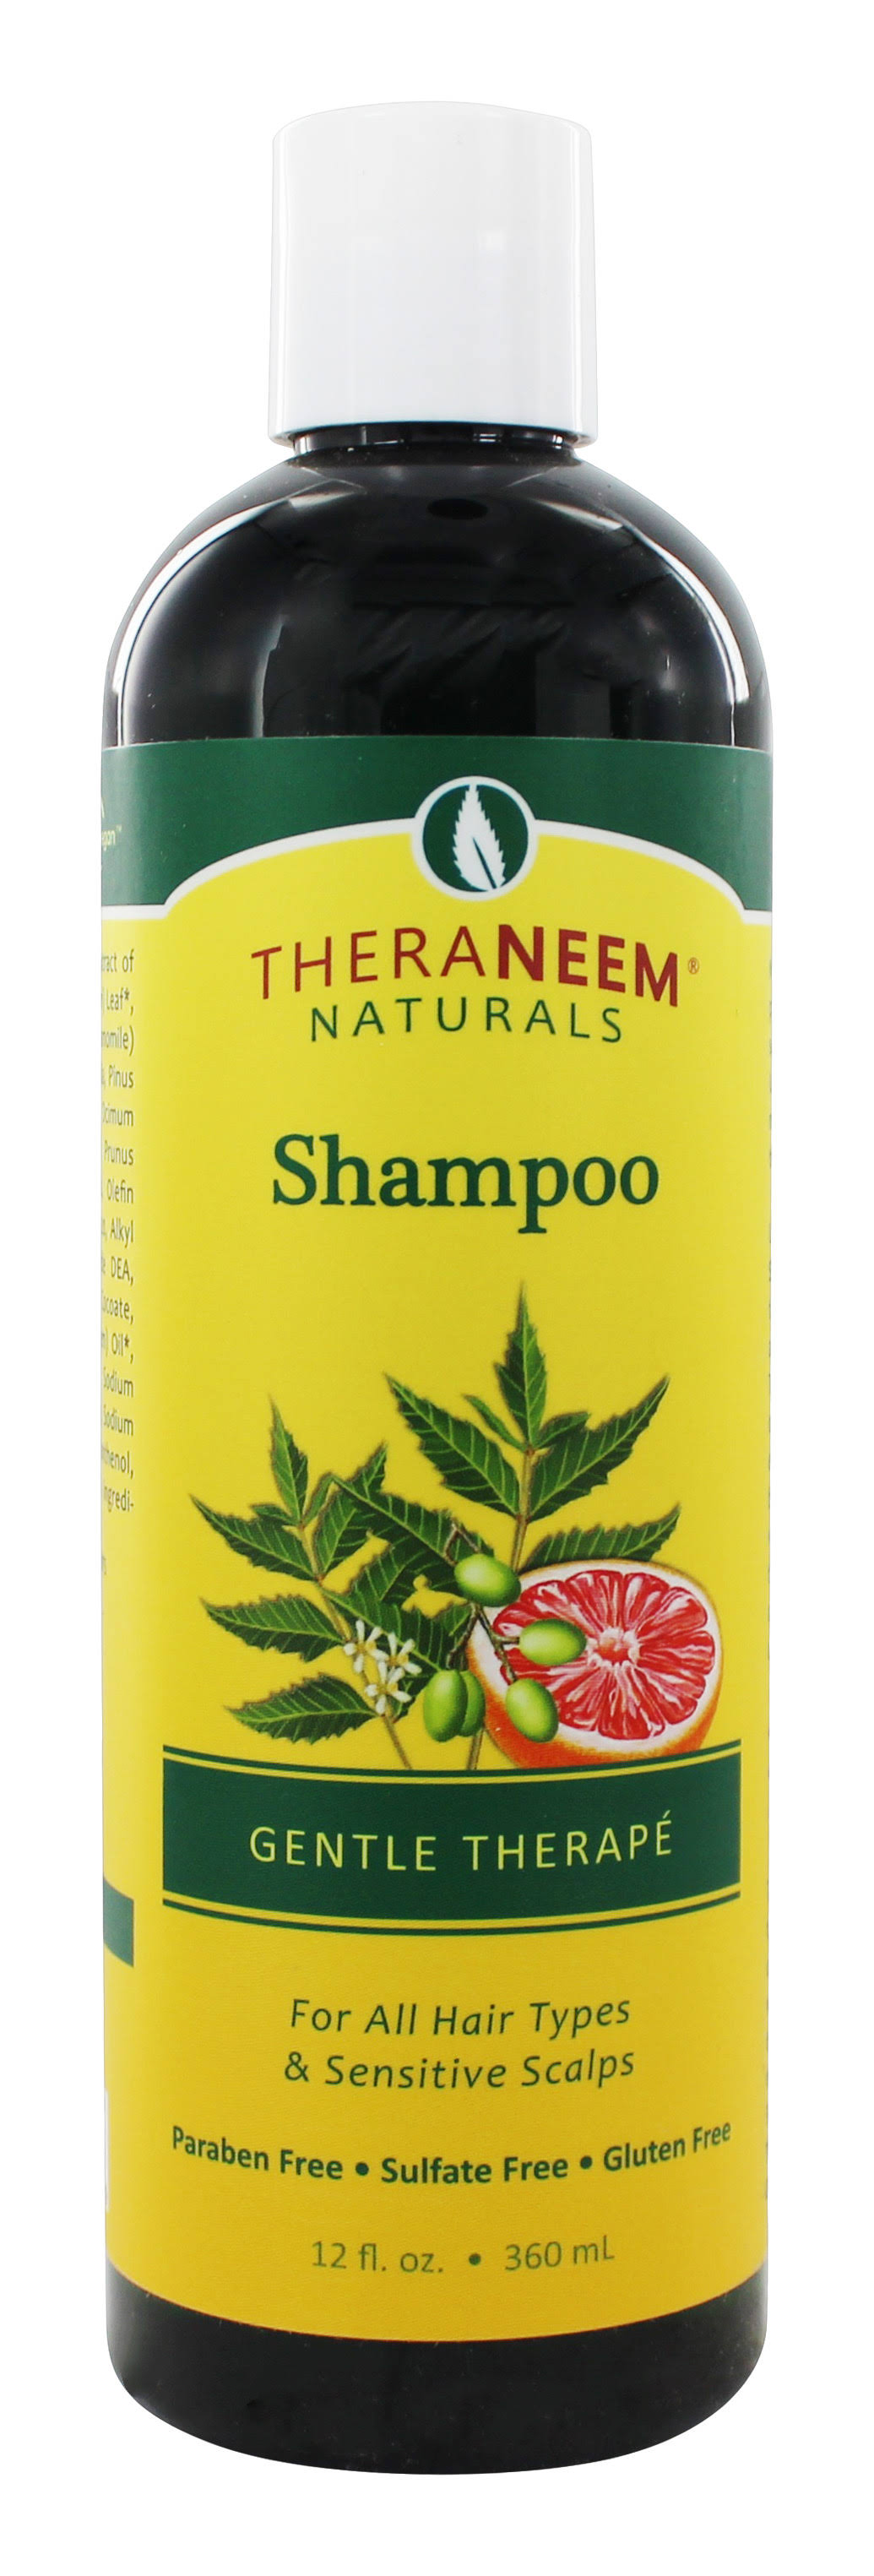 TheraNeem Organix Shampoo - Gentle Therape